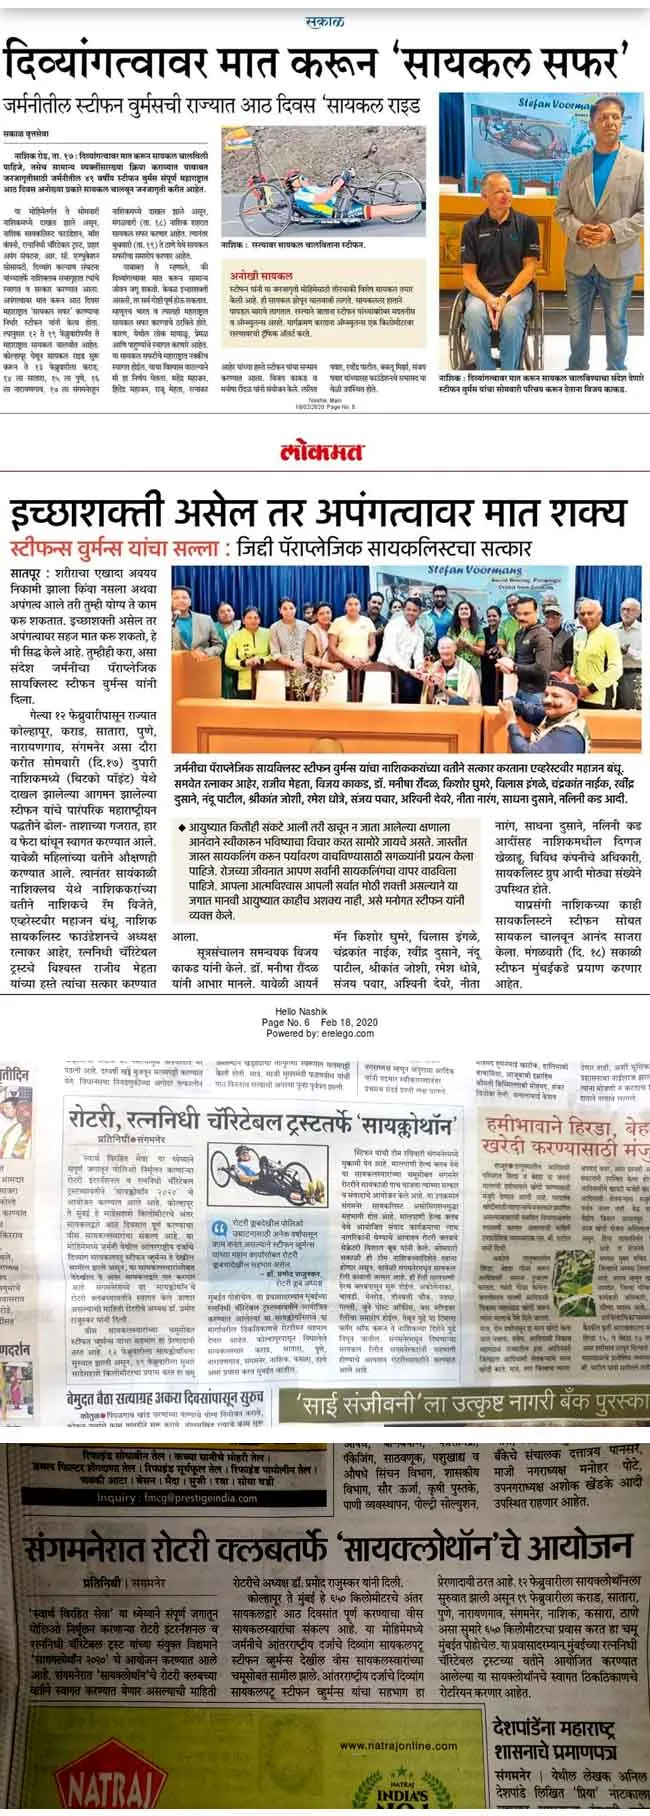 Ratna Nidhi Charitable Trust Article in Sakal News Paper